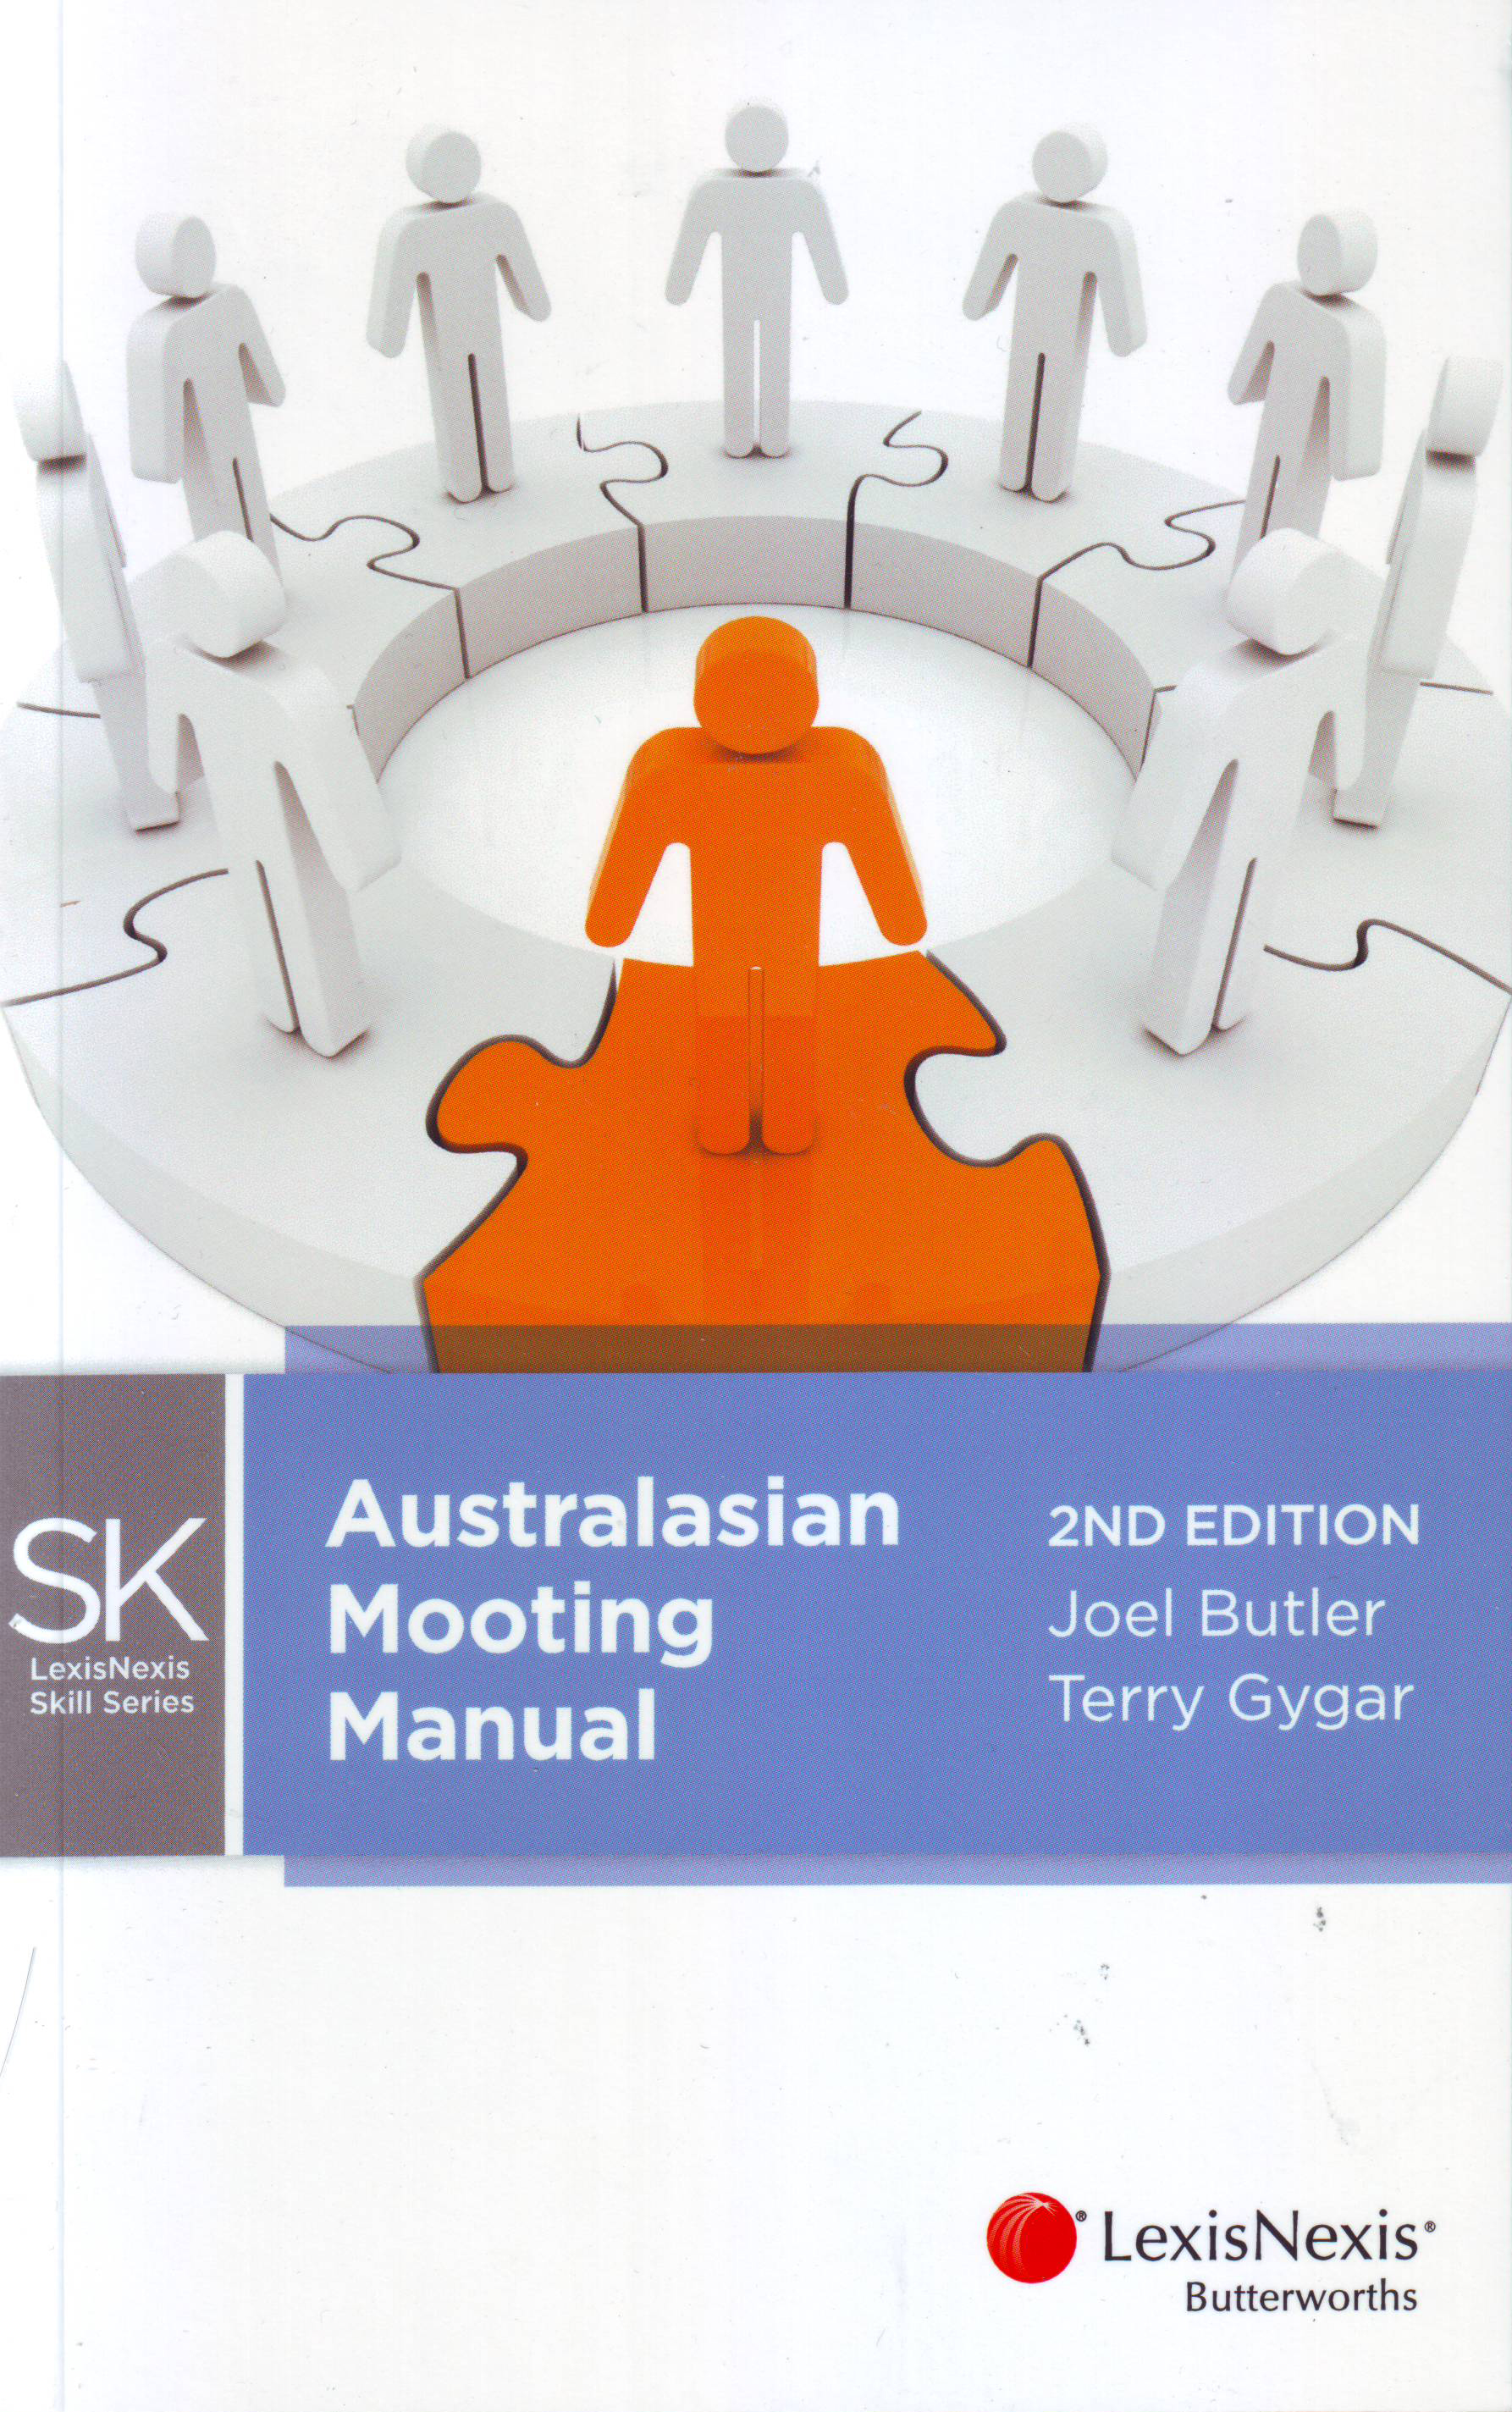 Australasian Mooting Manual e2